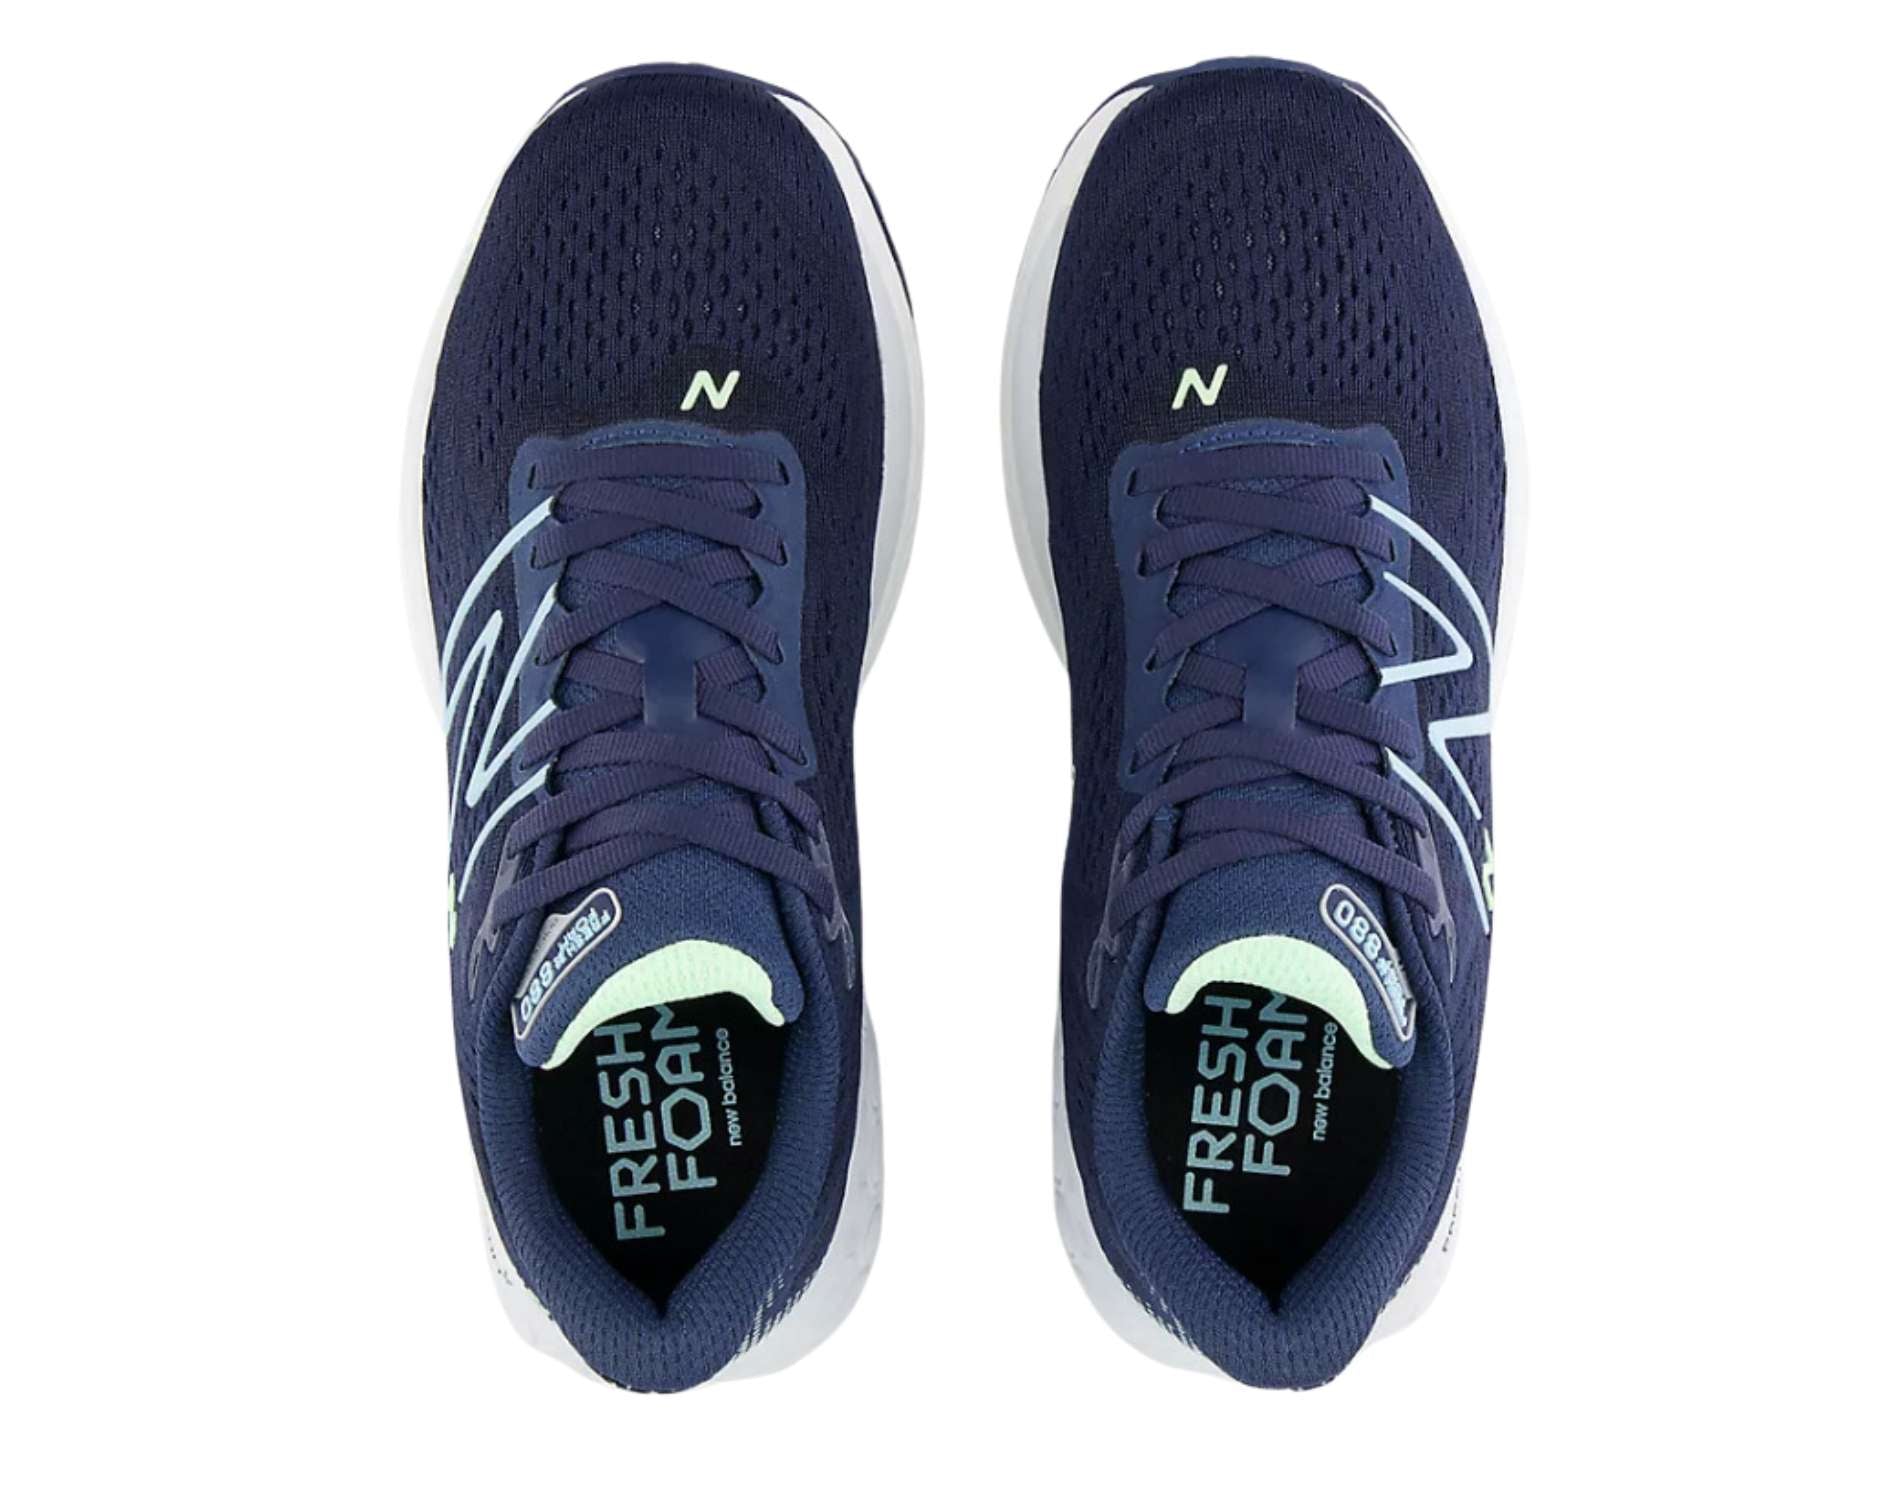 New Balance Fresh Foam 880 v 13 womens wide shoe in navy blue colour